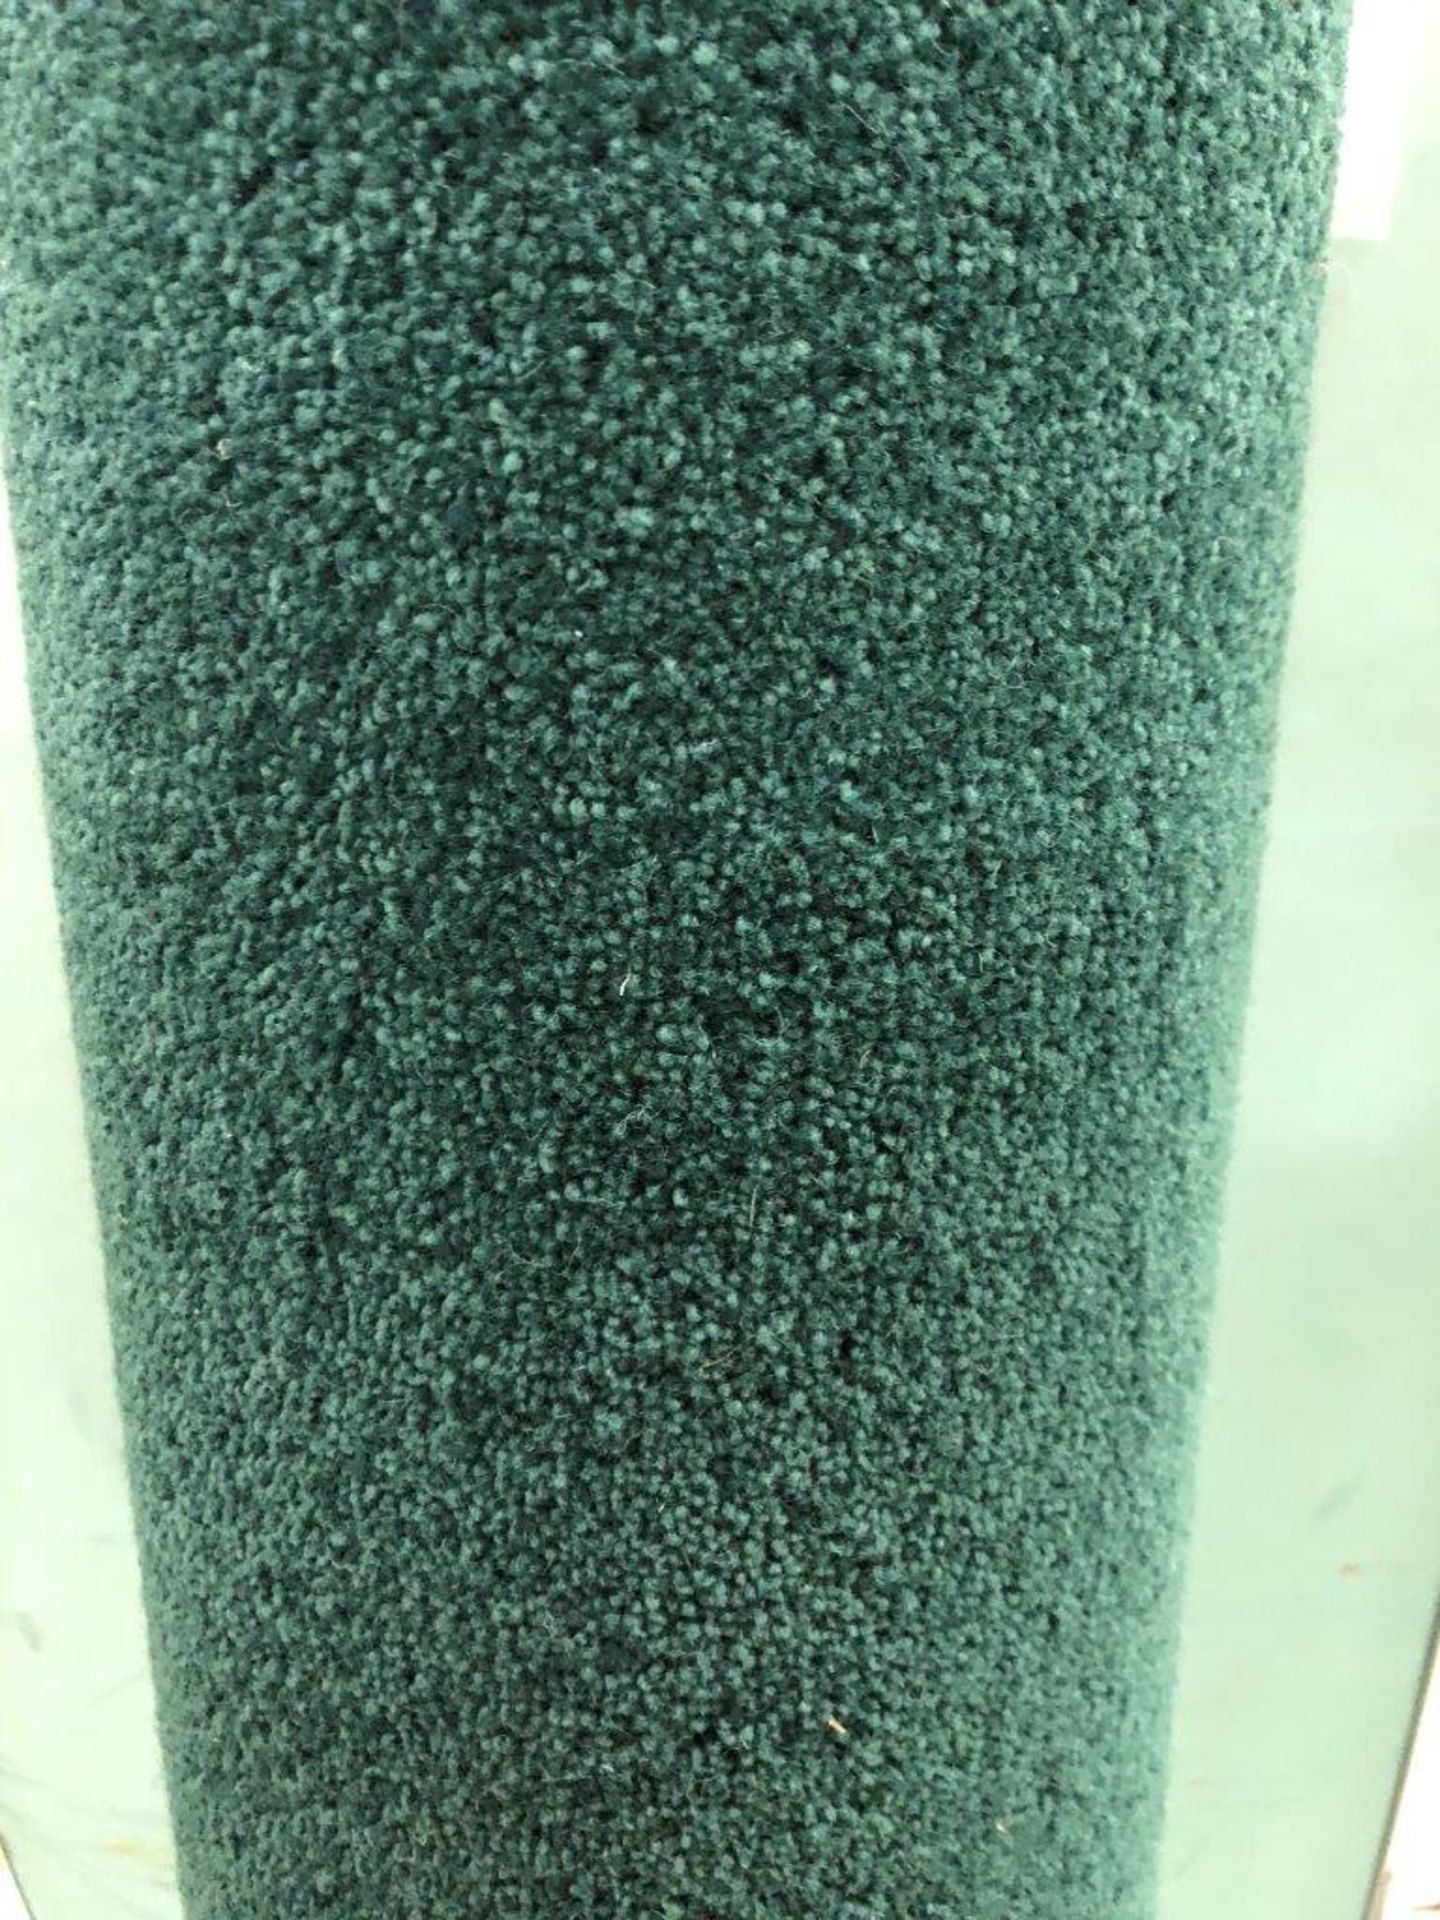 1 x Ryalux Carpet End Roll - Green 2.2x1.9m2 - Image 3 of 3